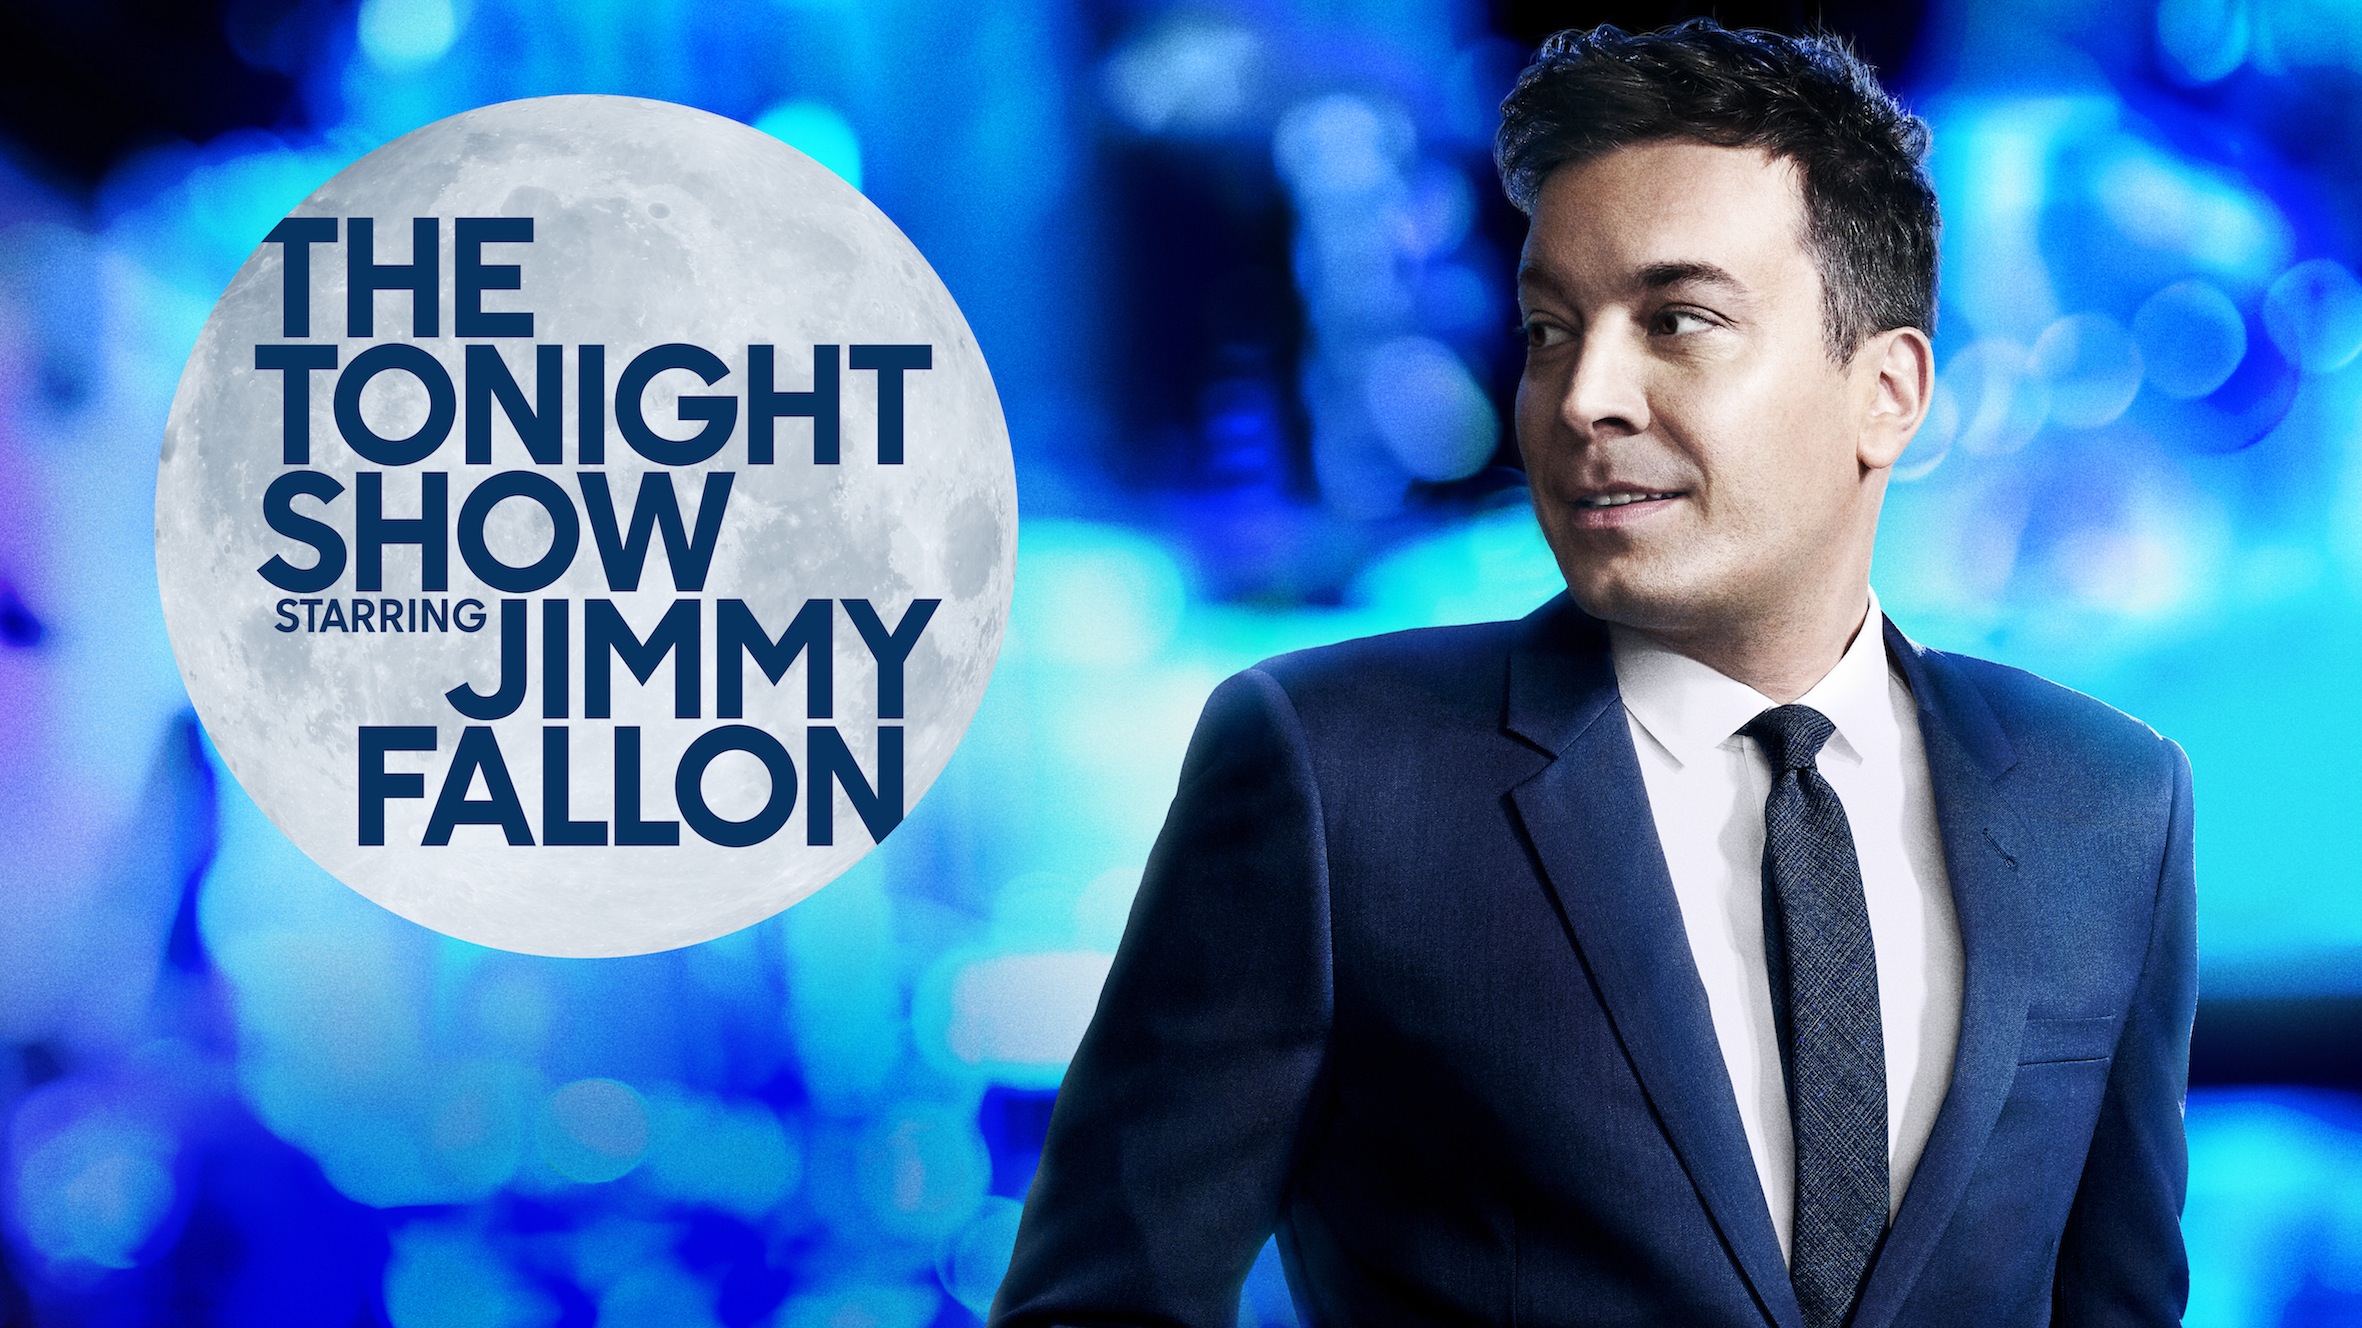 Télécharger des fonds d'écran The Tonight Show Starring Jimmy Fallon HD